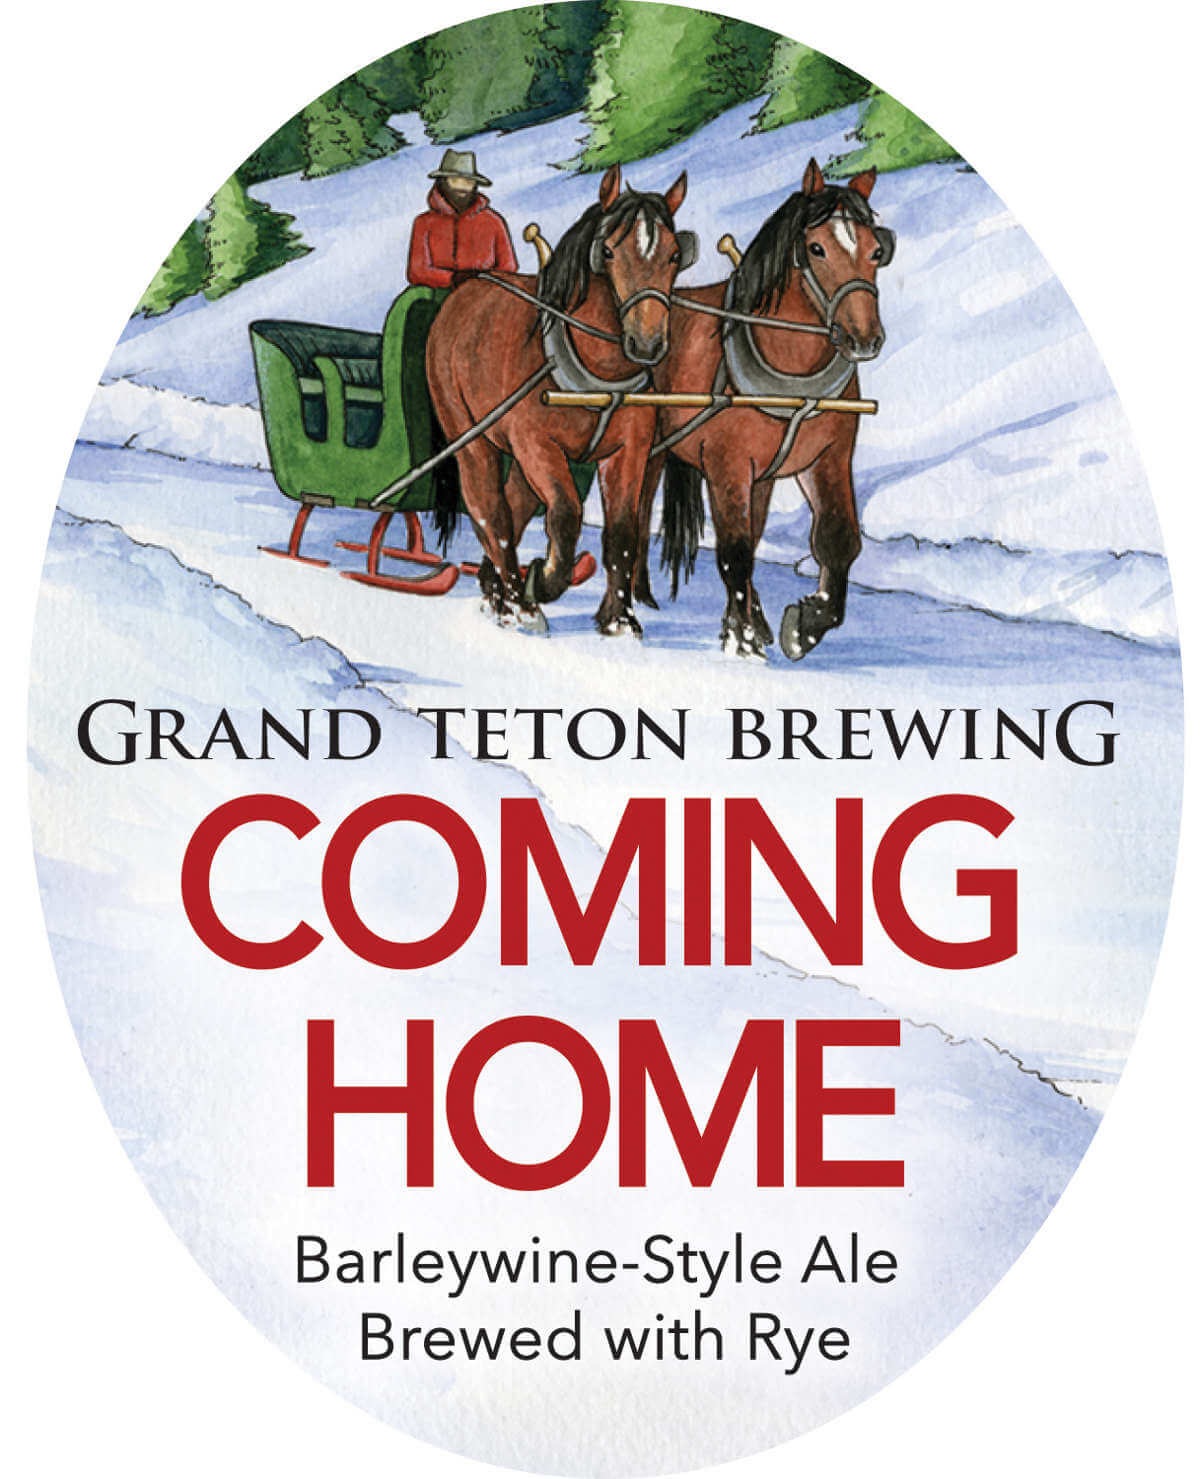 Advent Beer Calendar 2016: Day 8: Grand Teton Coming Home